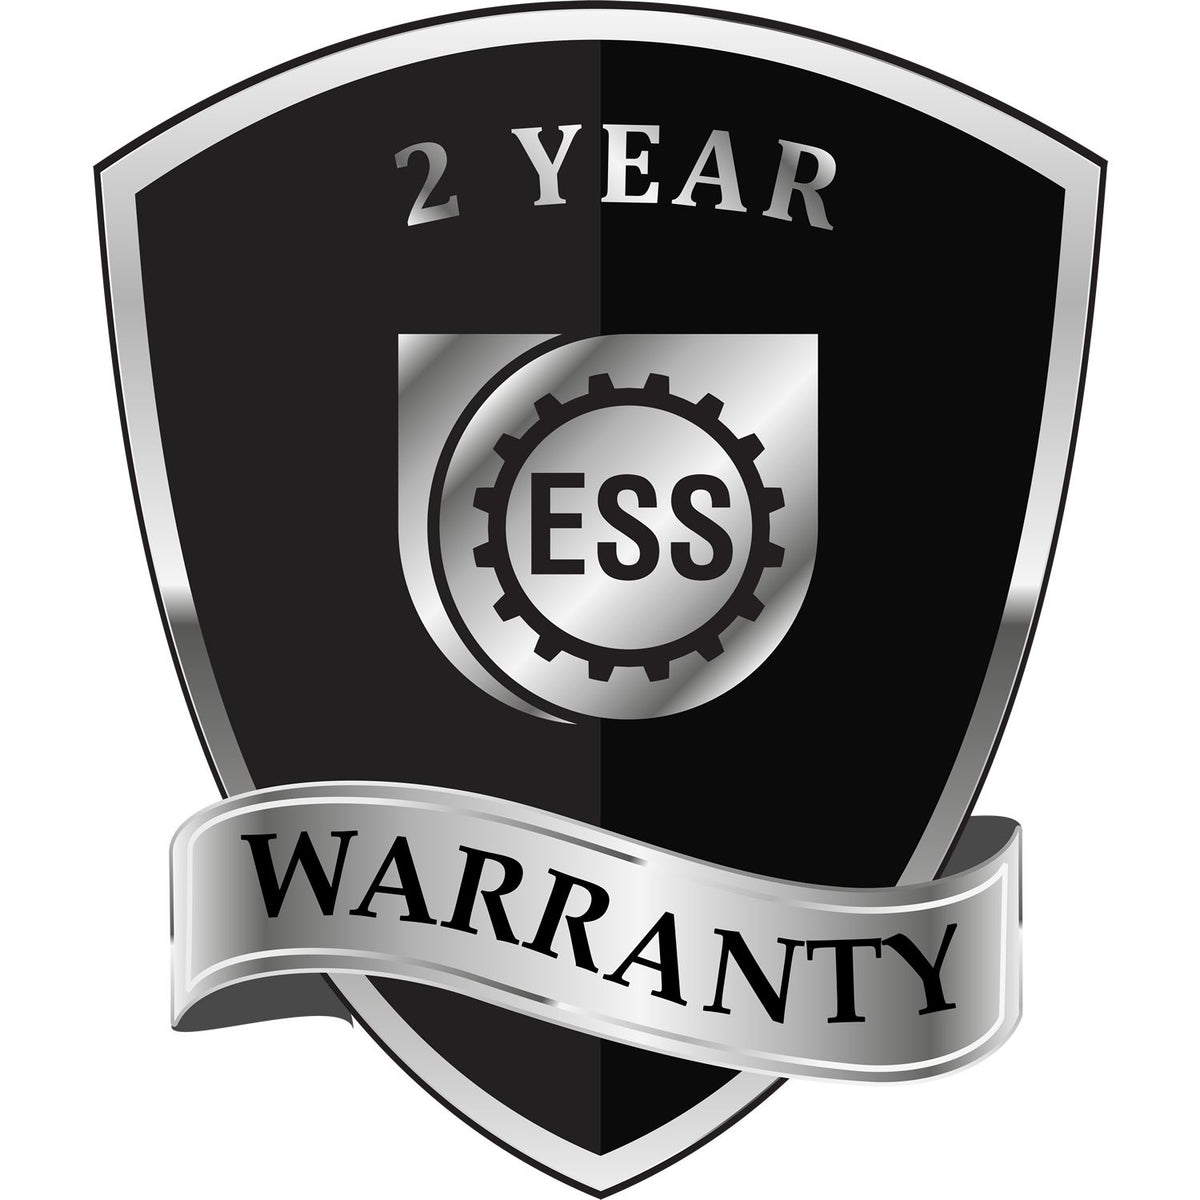 A black and silver badge or emblem showing warranty information for the Gift Missouri Land Surveyor Seal